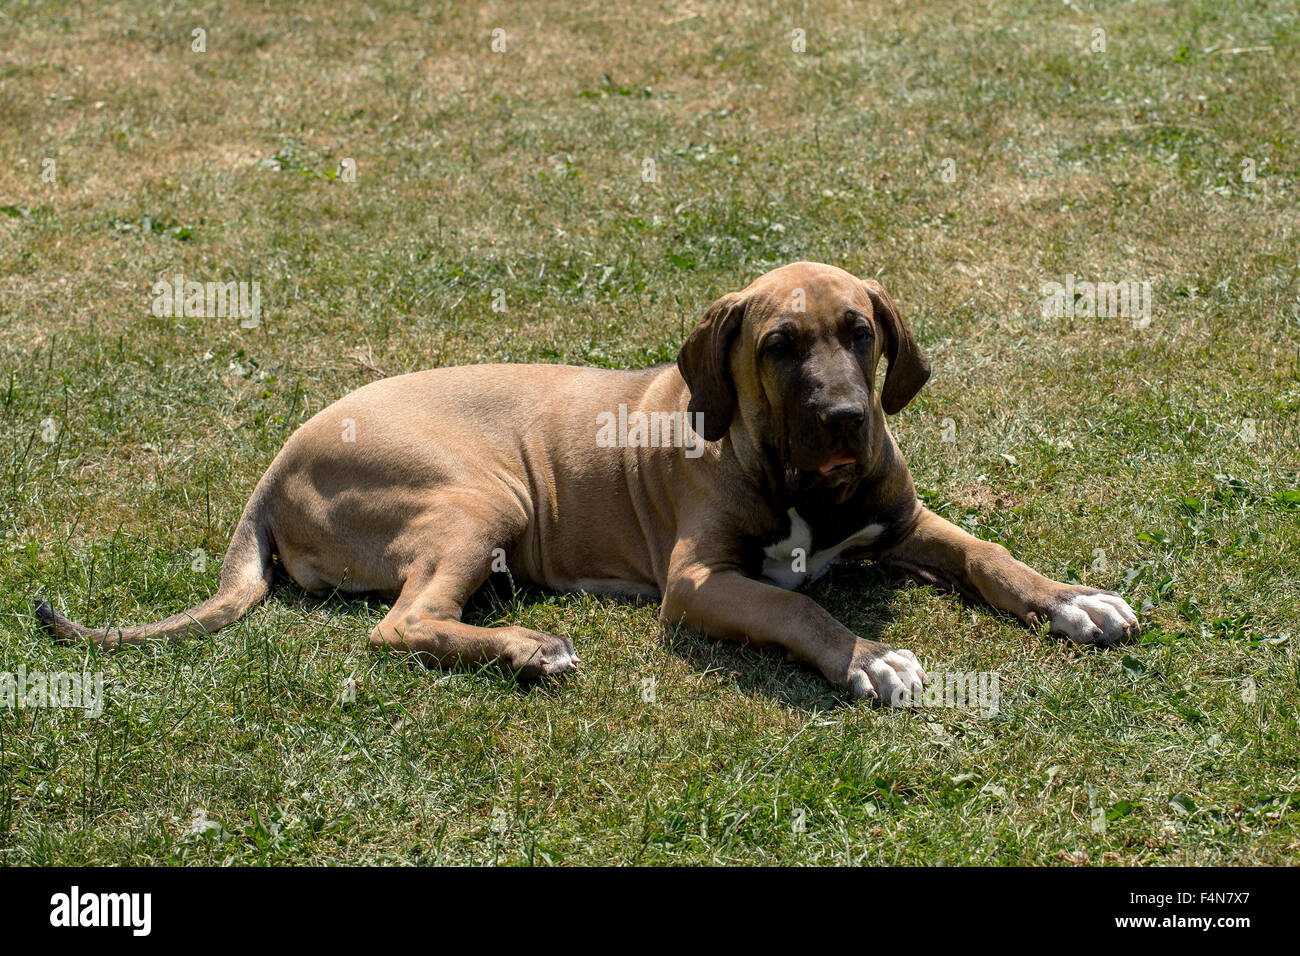 Dog fila brasileiro ~ Premium Stock Photo ~ Image #128630404